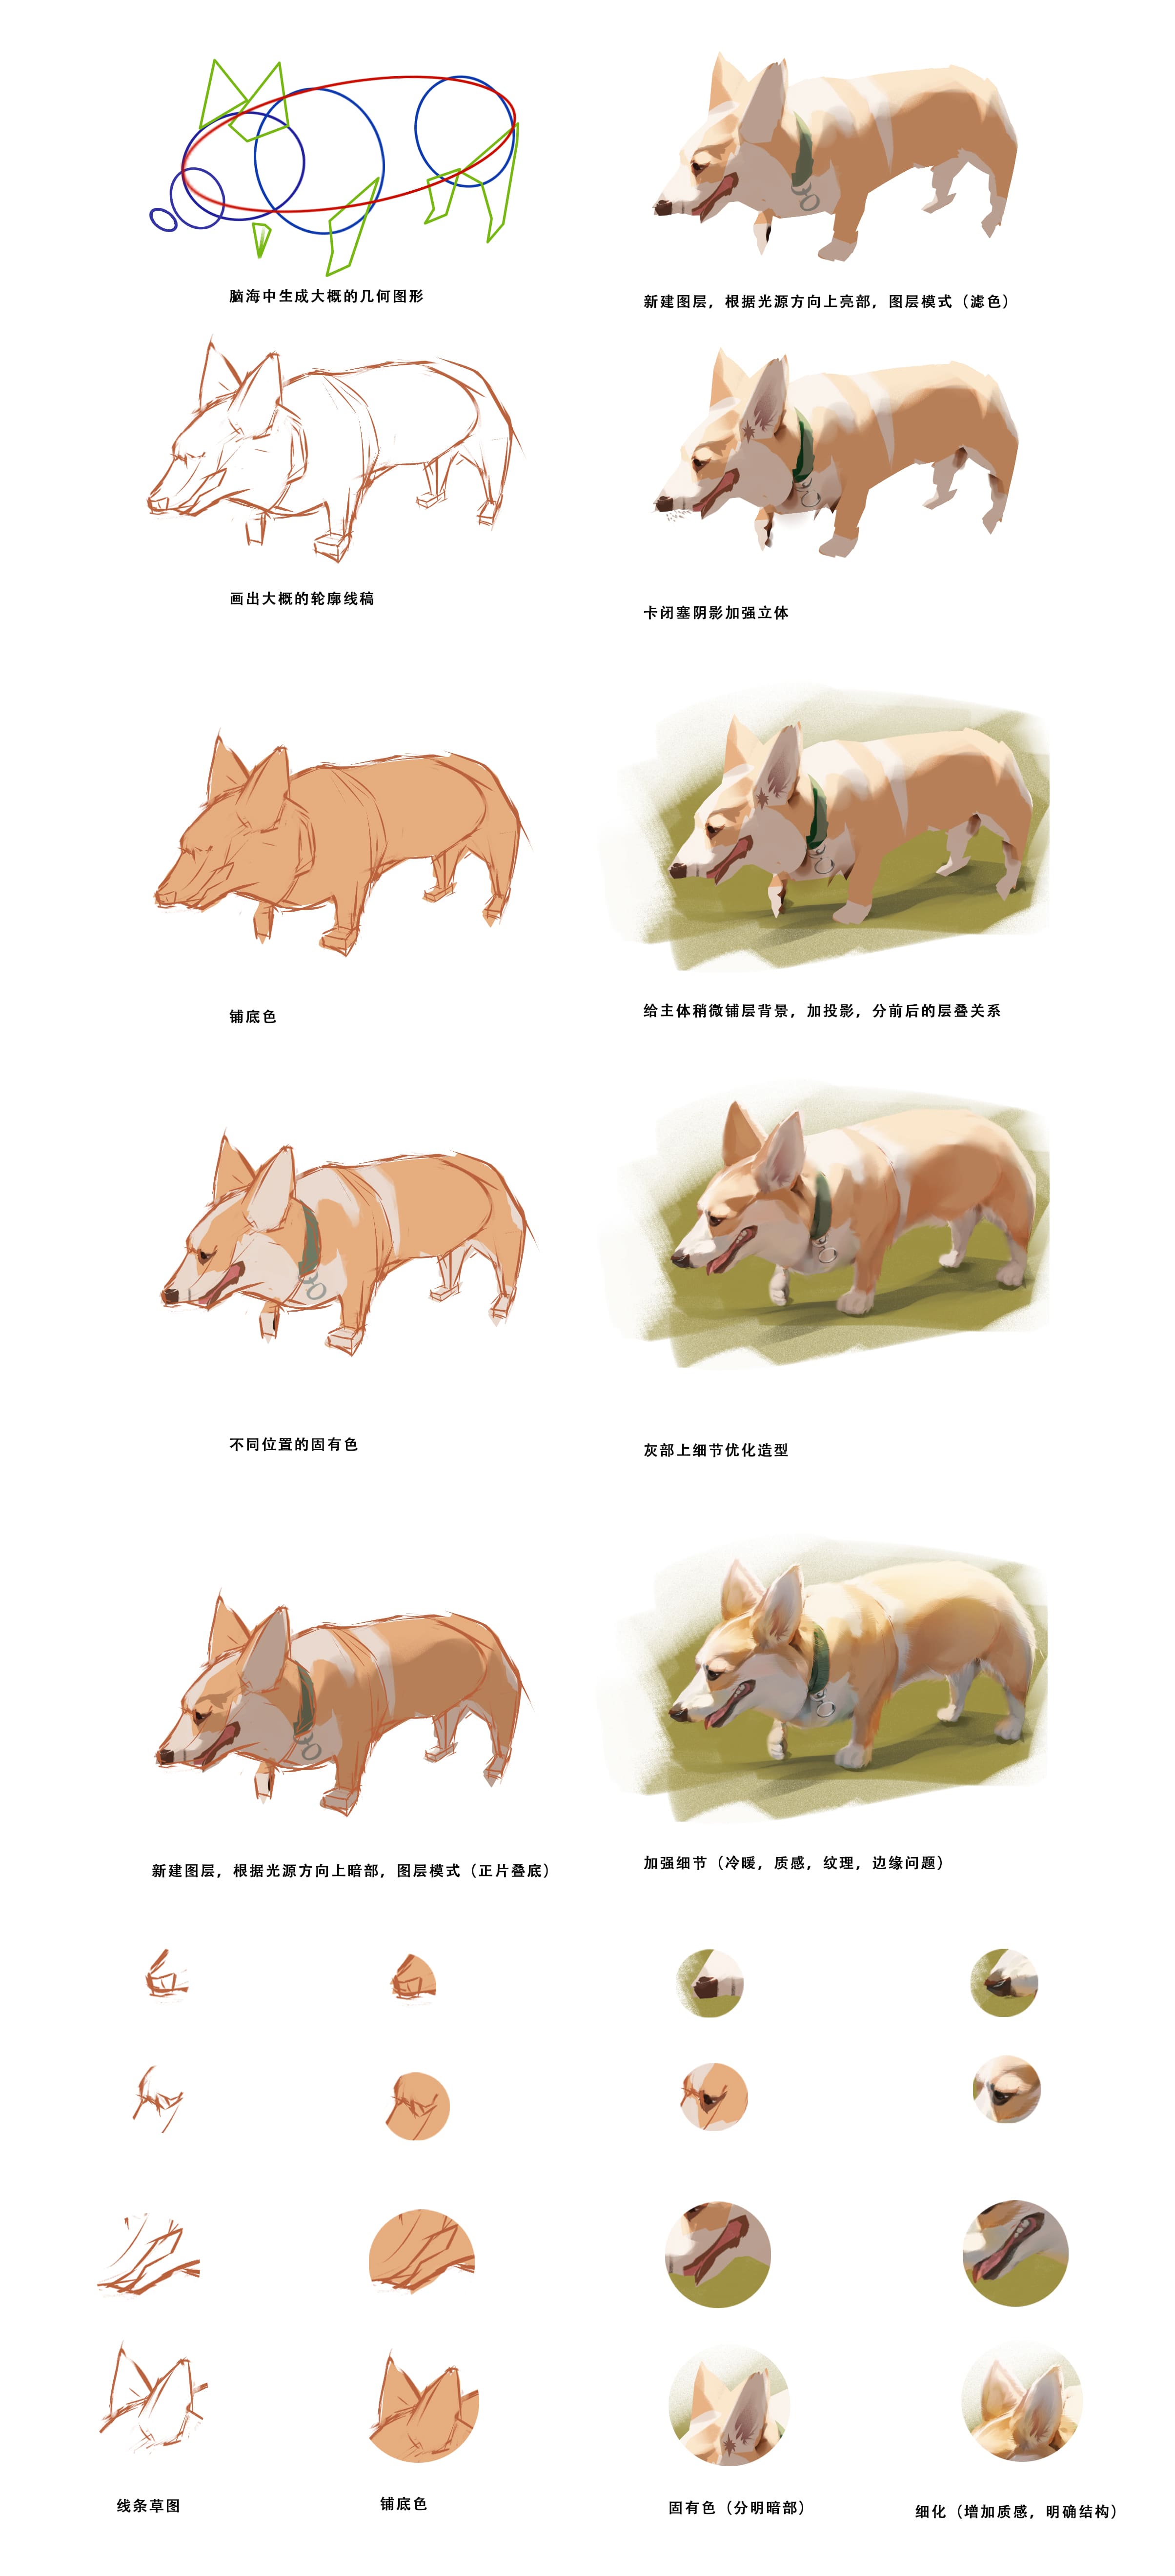 steps to draw a realistic dog